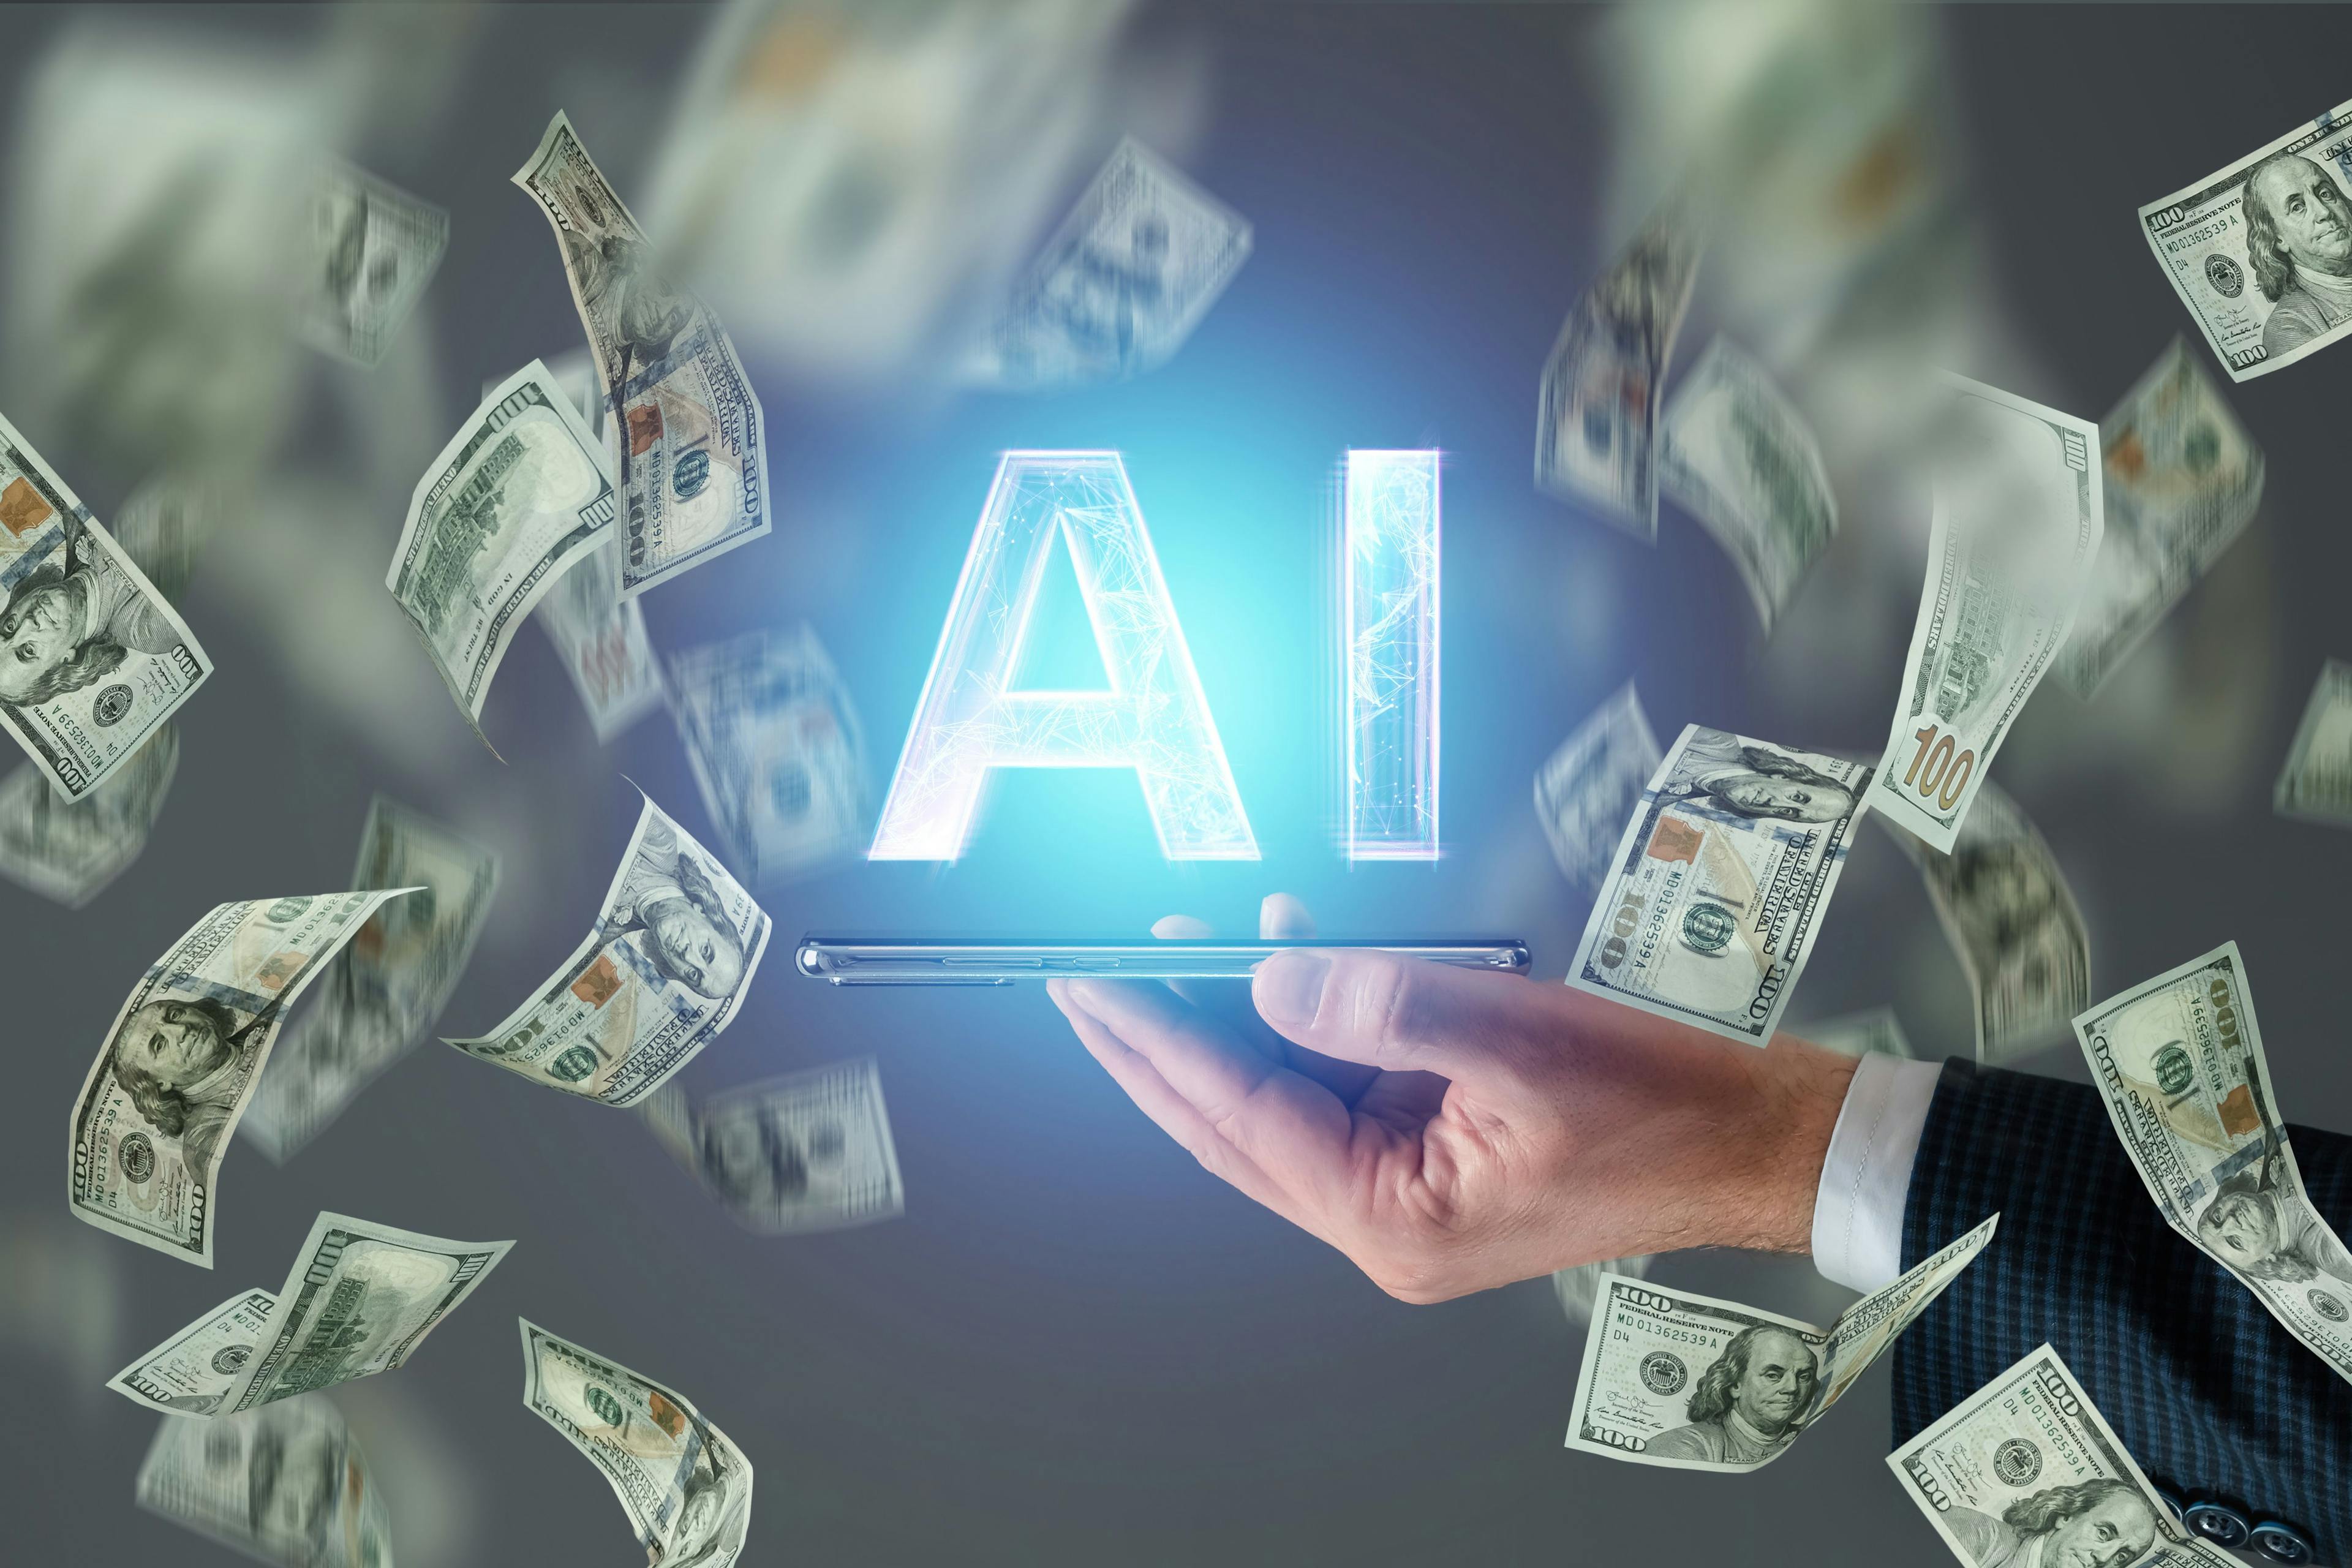 Make the right decisions about AI: ©Aliaksandr Marko - stock.adobe.com